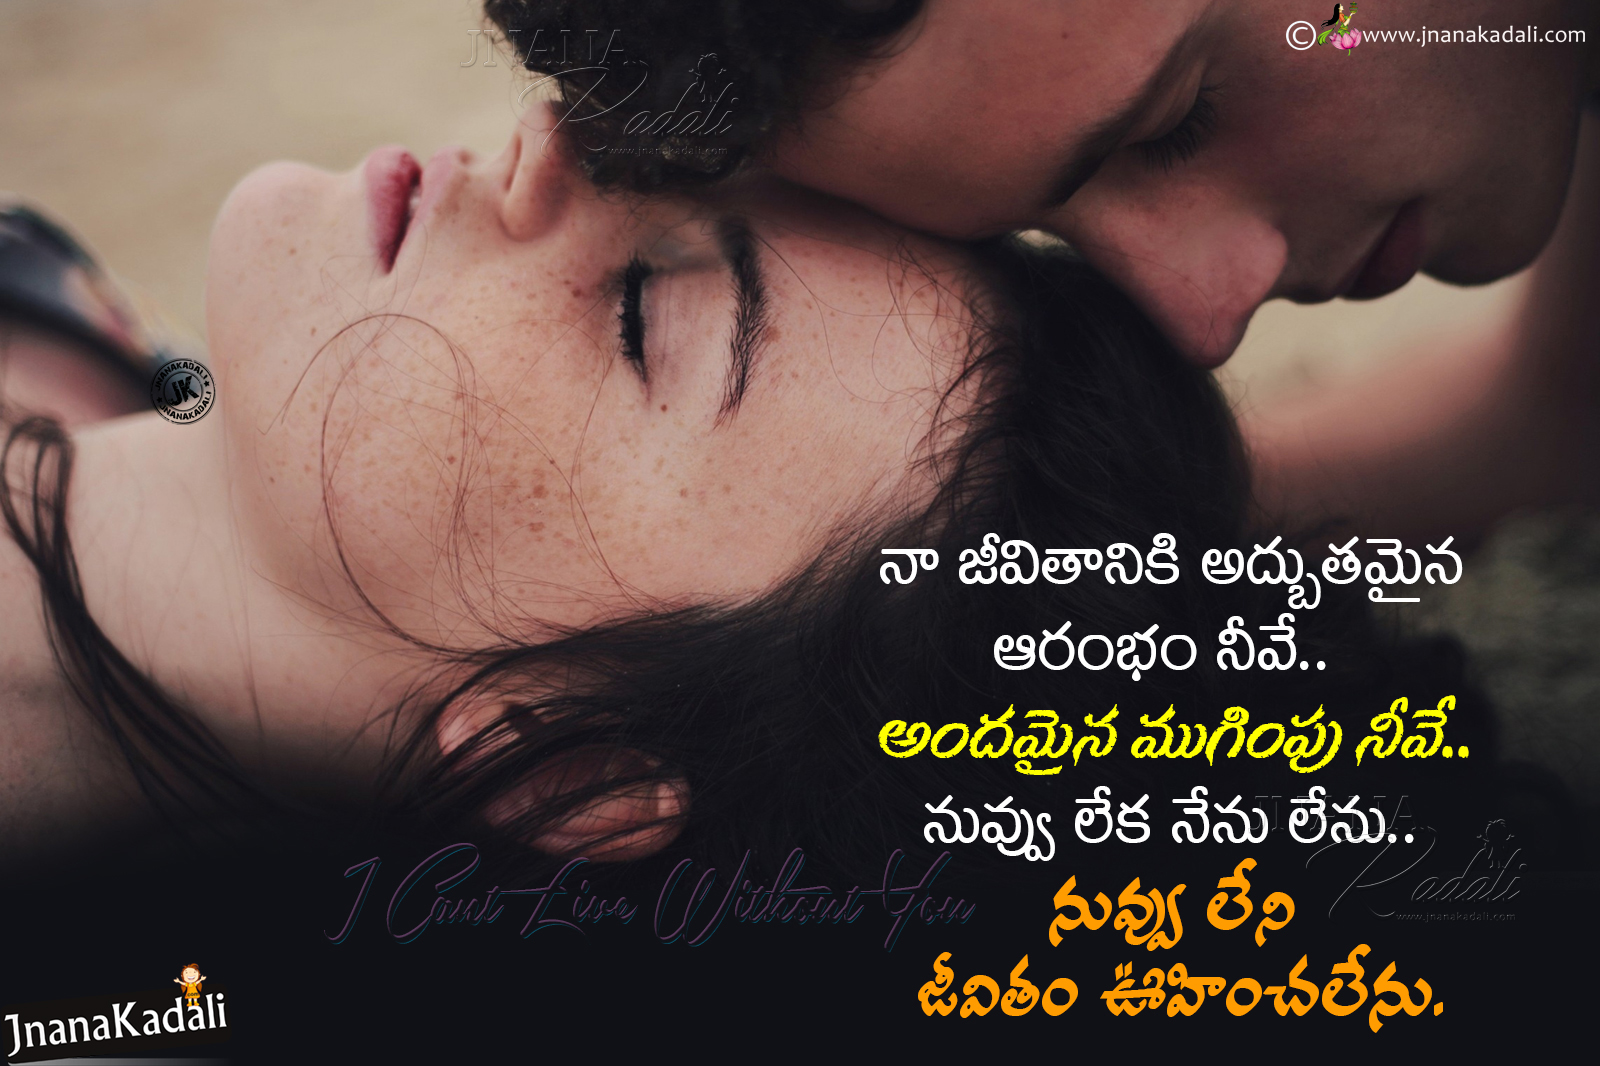 Telugu Language Top Love Messages and Greetings written by Manikumari